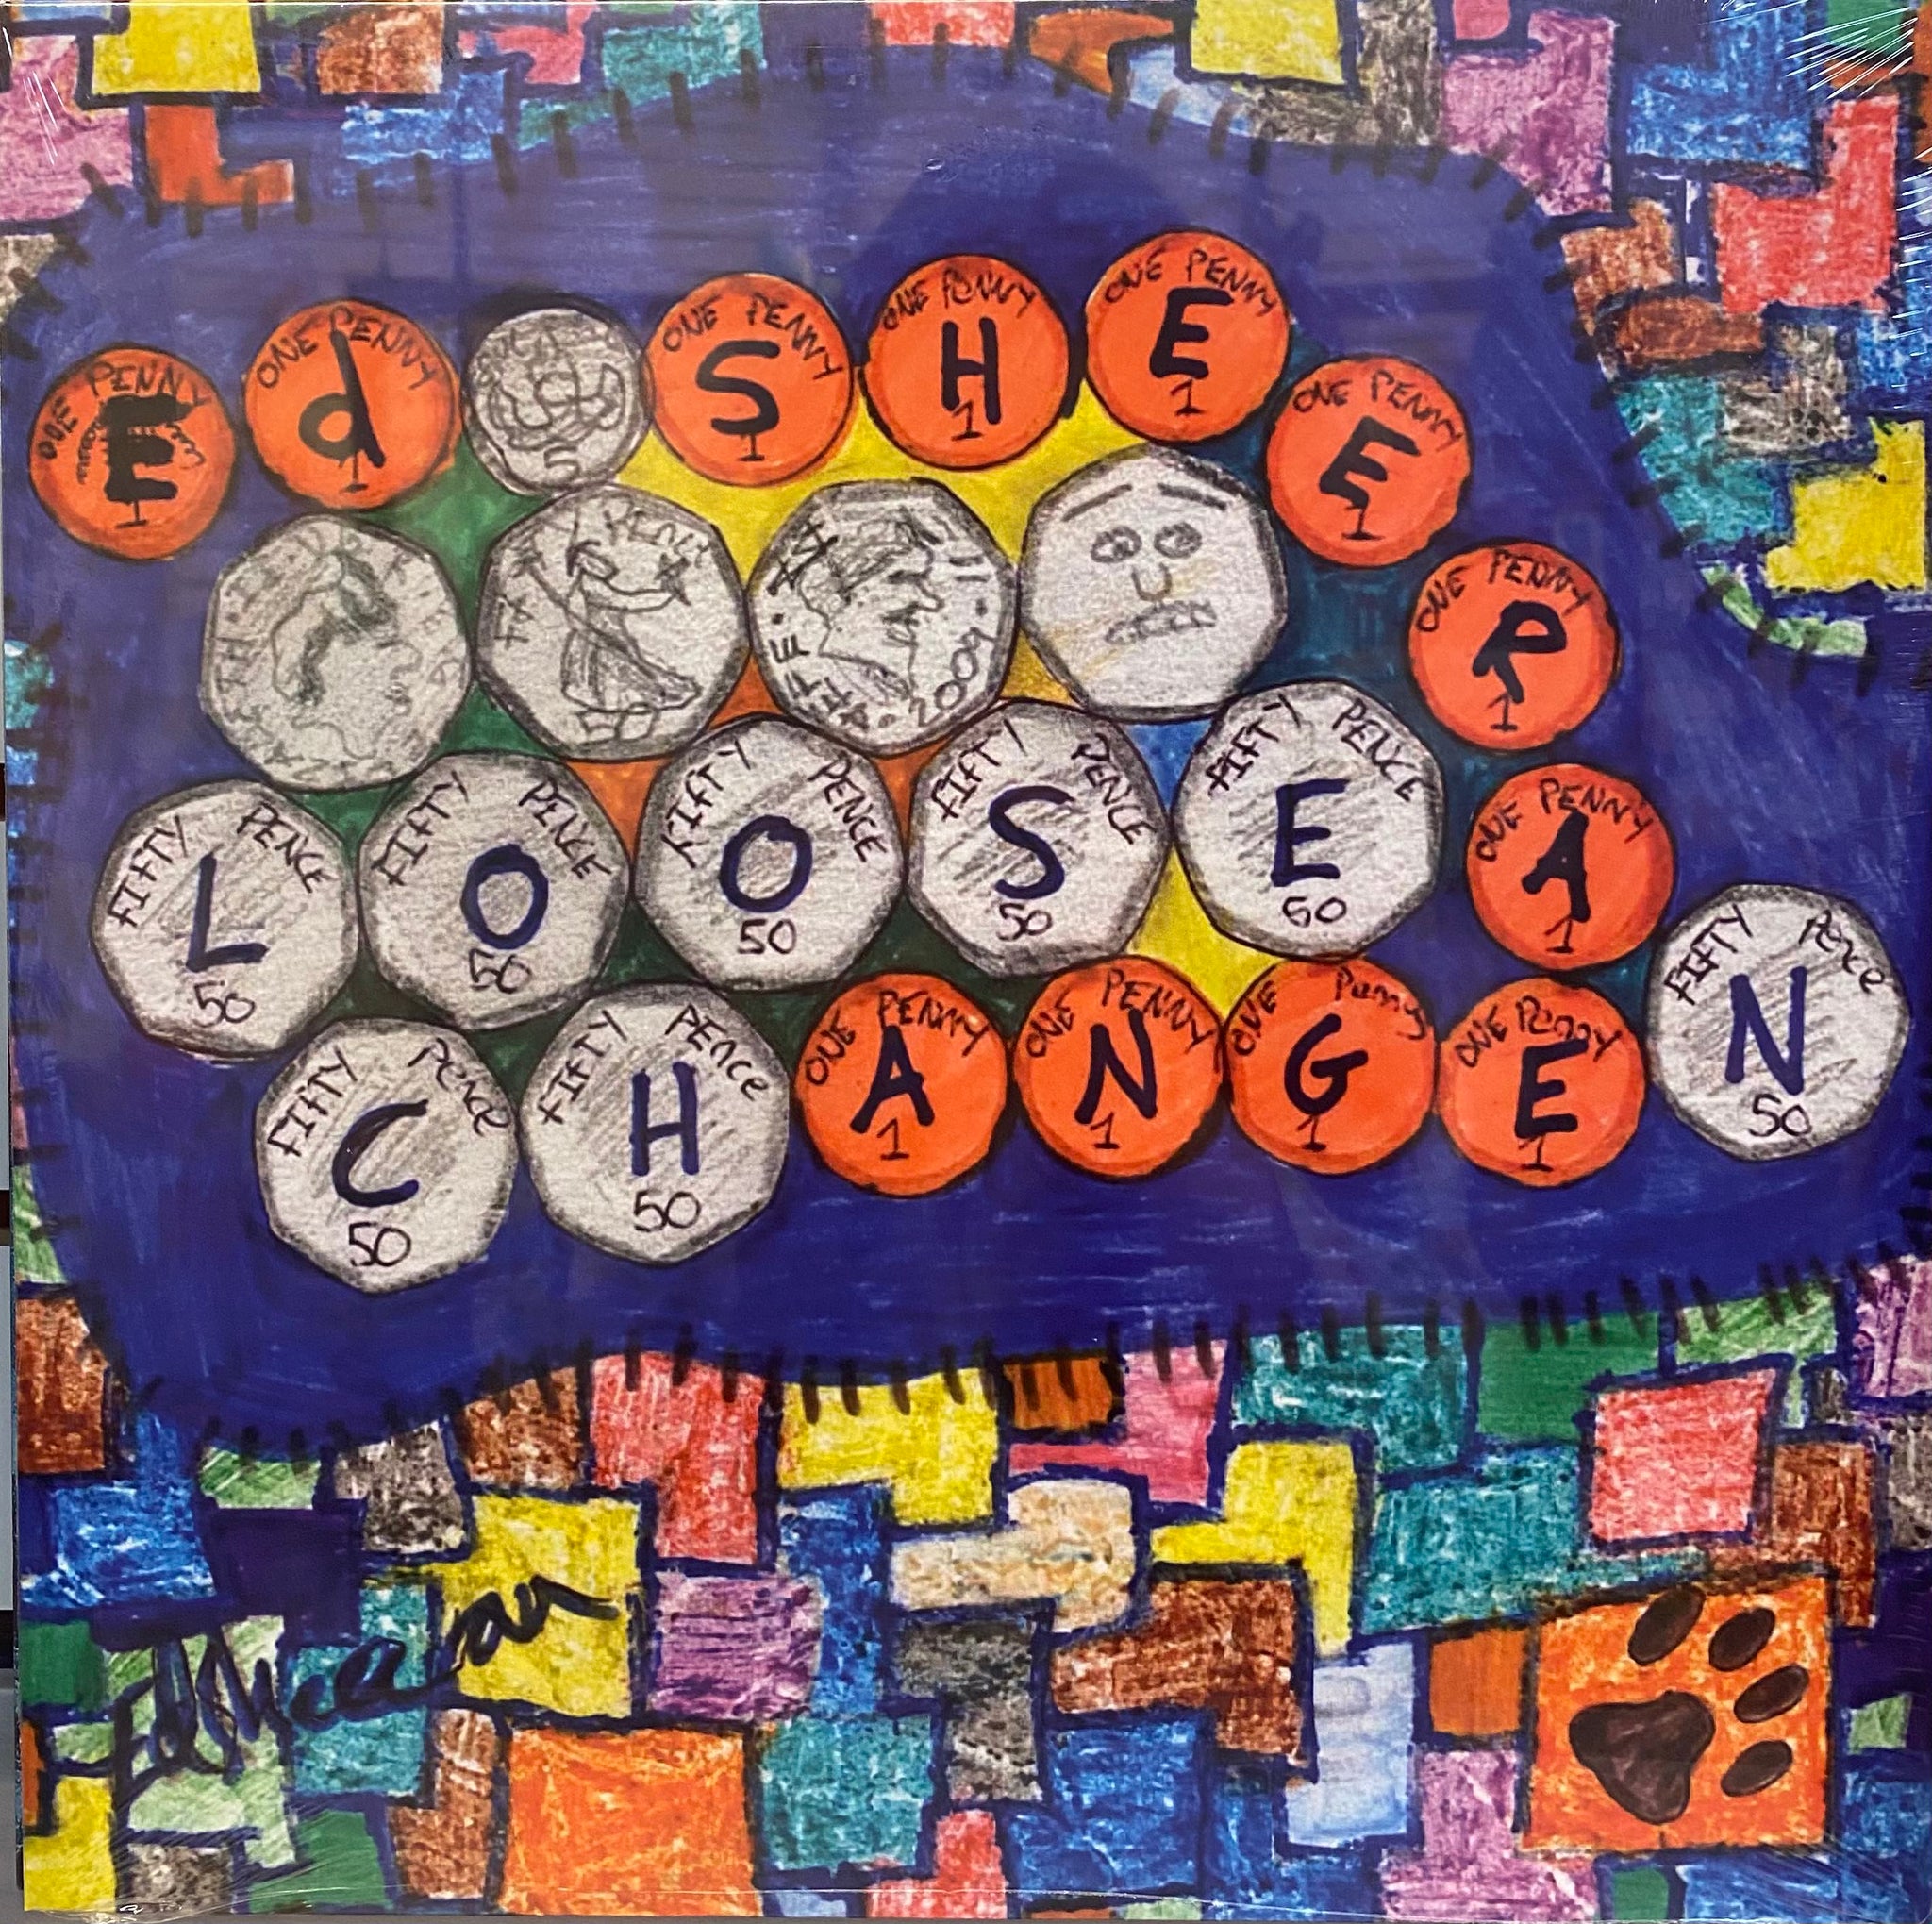 Ed Sheeran - Loose Change - Vinyl Record LP